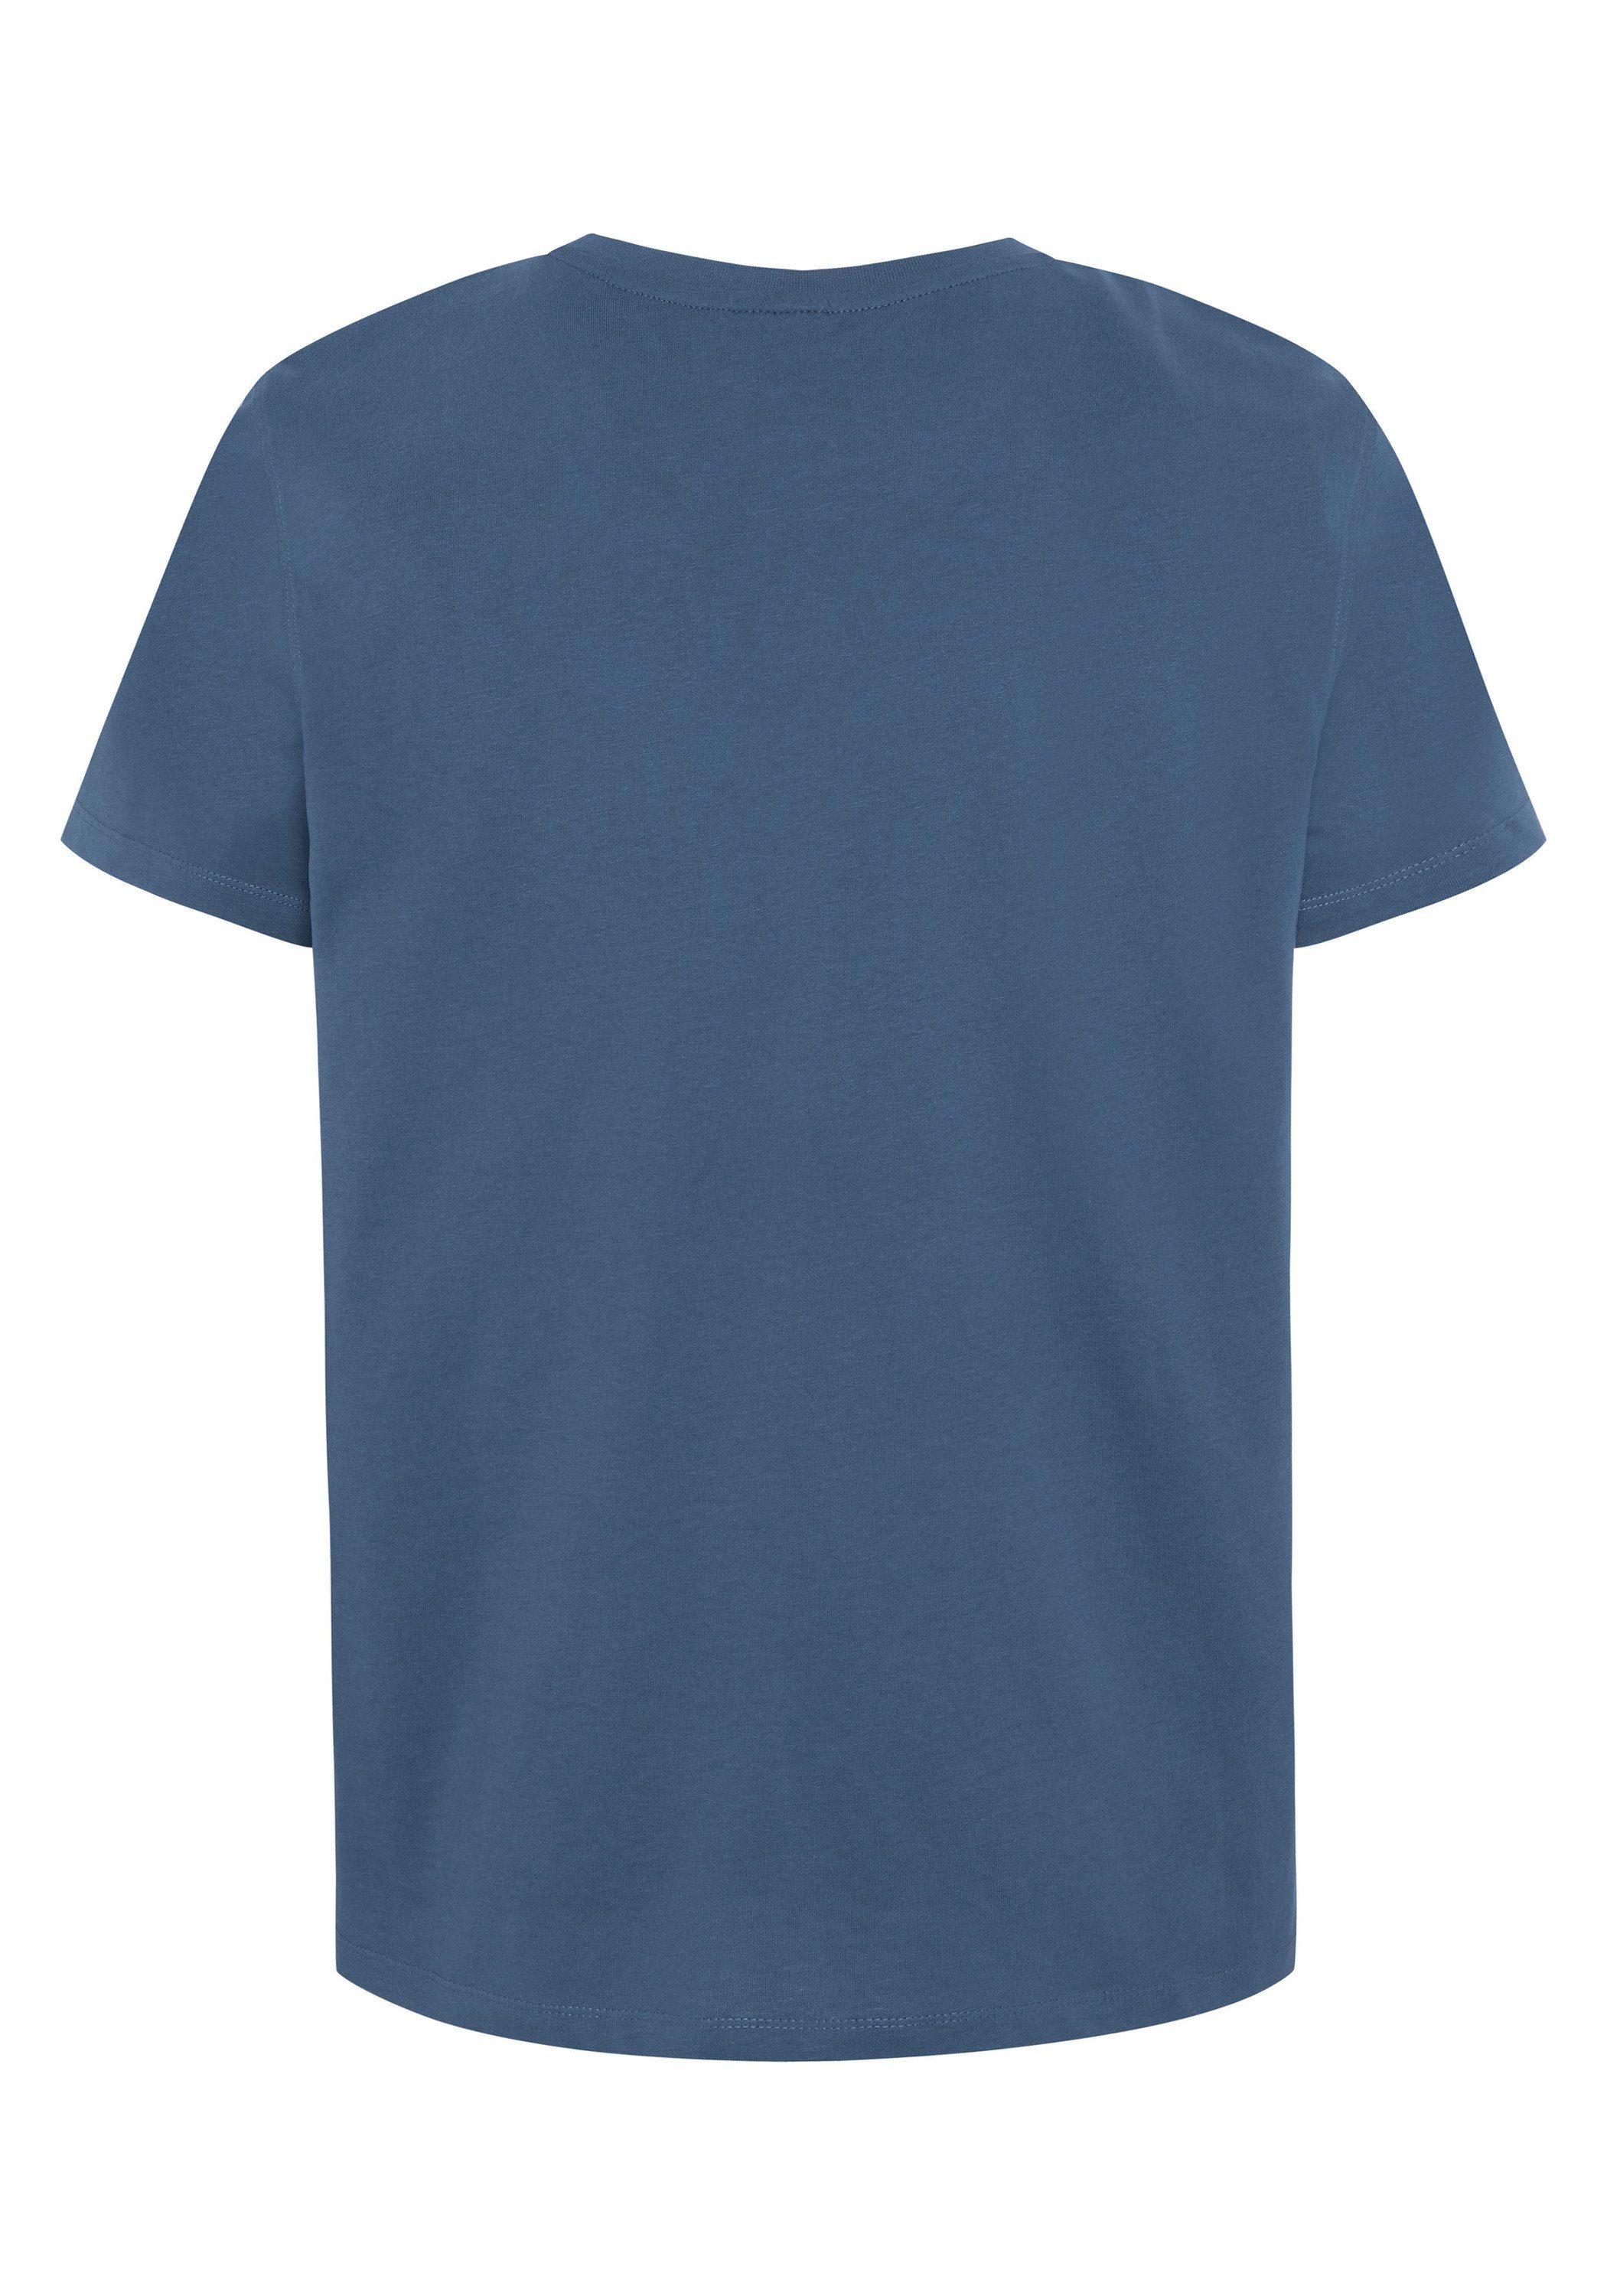 19-4026 Sam Uncle Print-Shirt Blue Single-Jersey soften aus Ensign